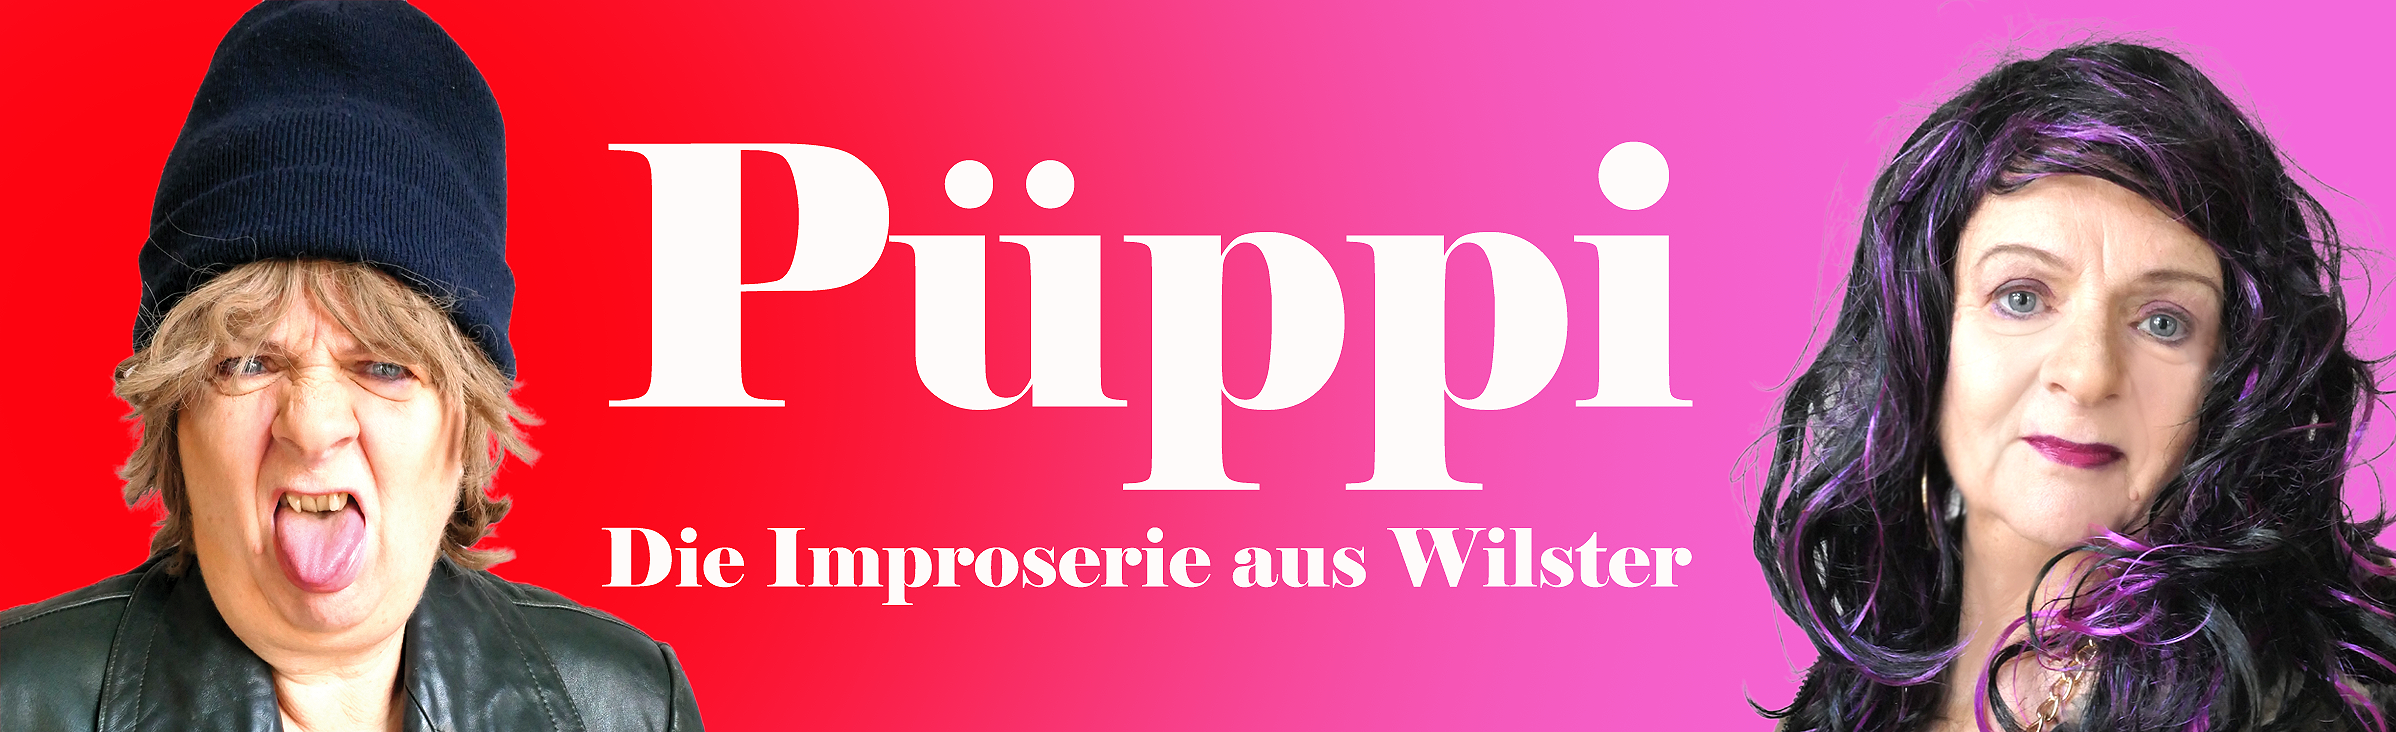 PÜPPI - Die Improserie aus Wilster